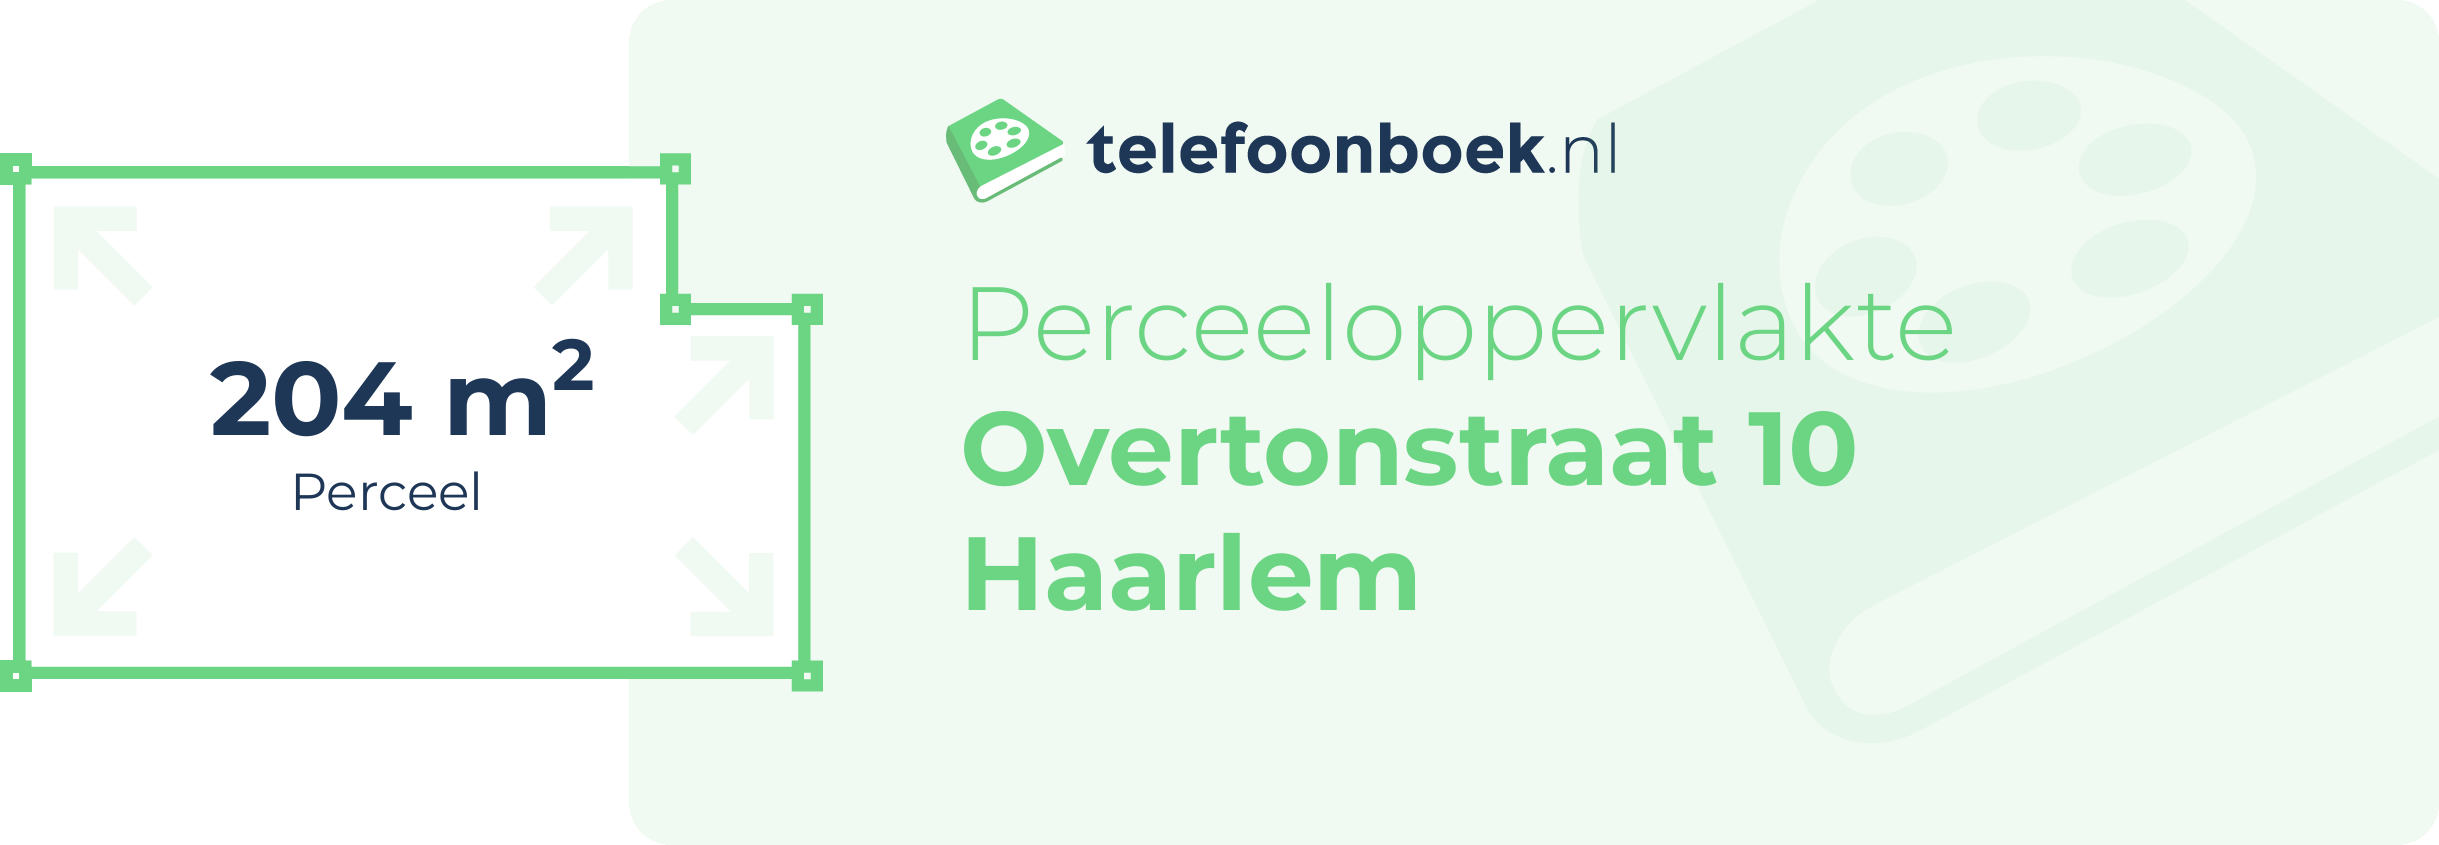 Perceeloppervlakte Overtonstraat 10 Haarlem